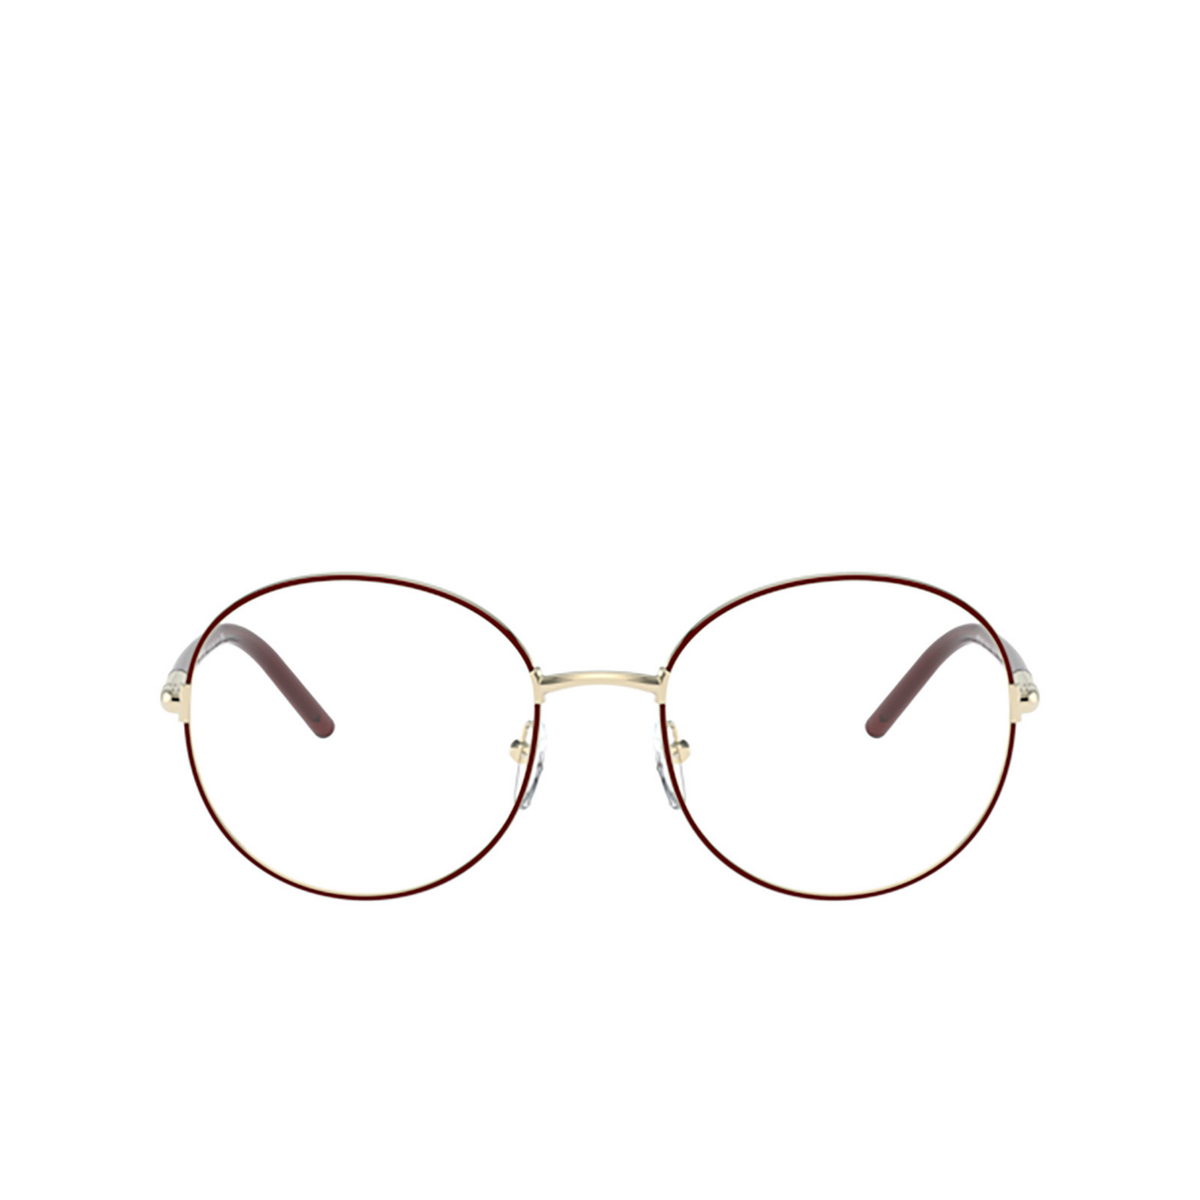 Prada® Round Eyeglasses: PR 55WV color Pale Gold / Bordeaux 09P1O1 - 1/3.